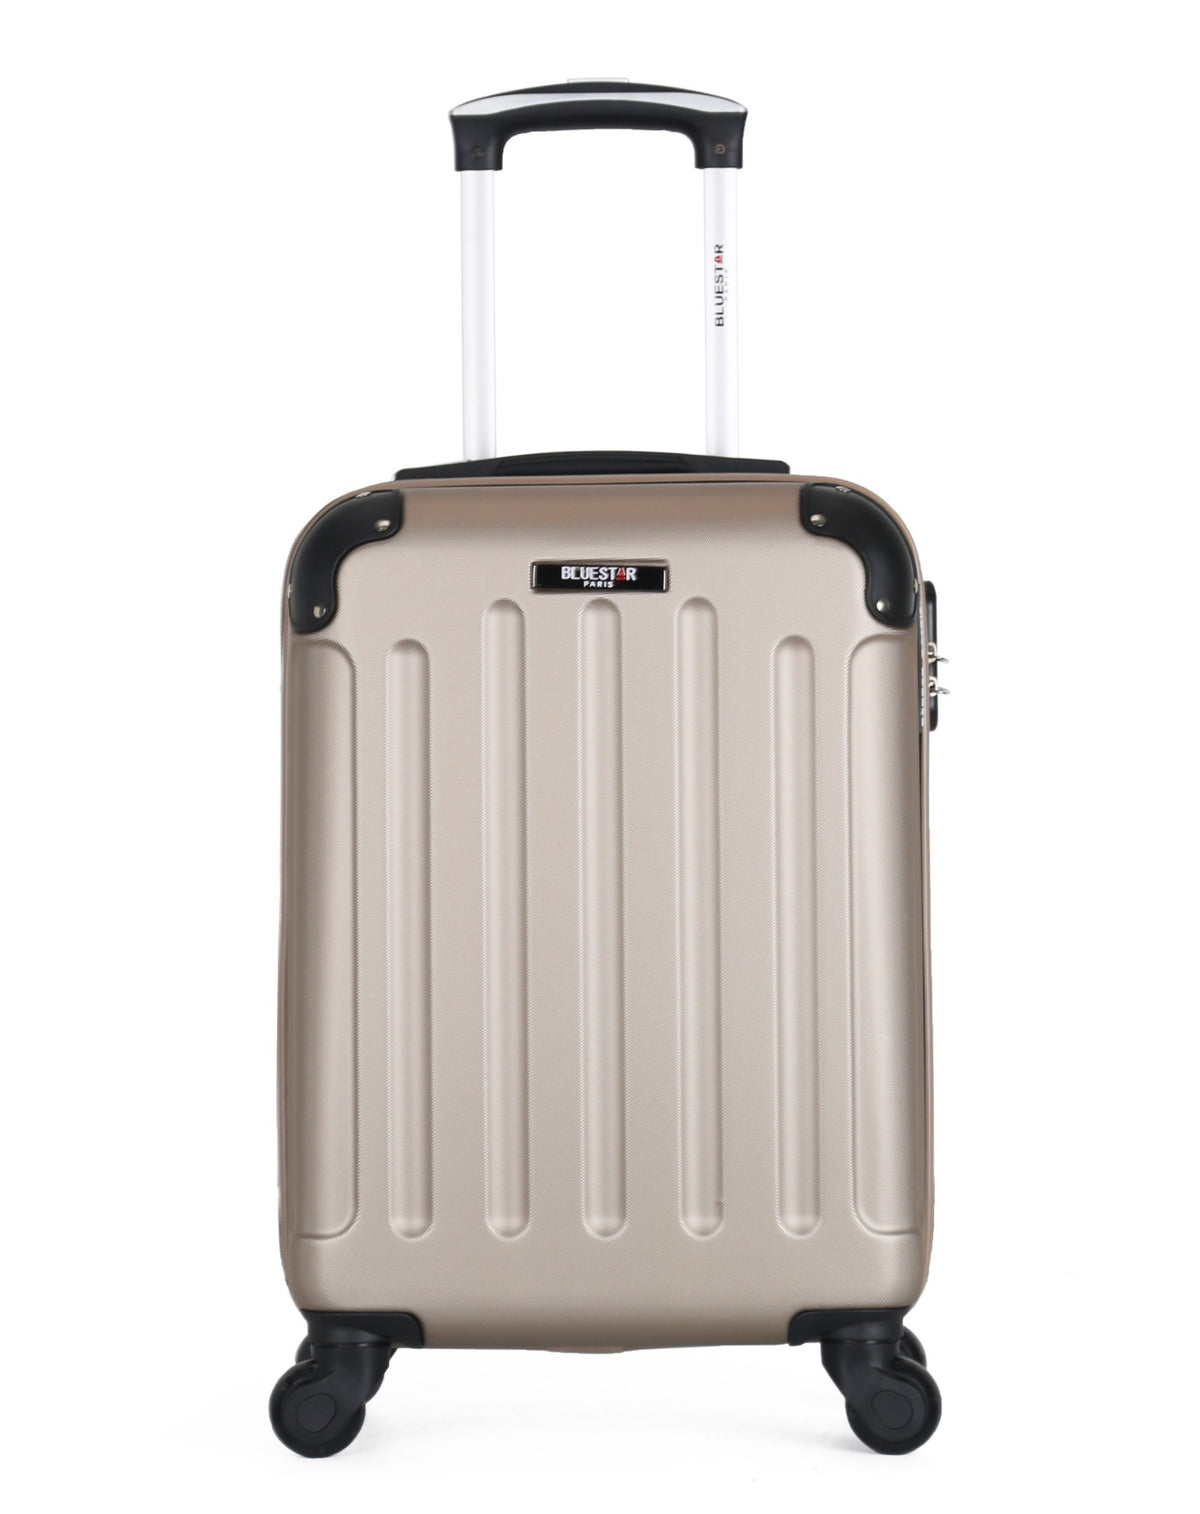 Petite valise cabine bleu marine en matériau durable AIRPORT MODE